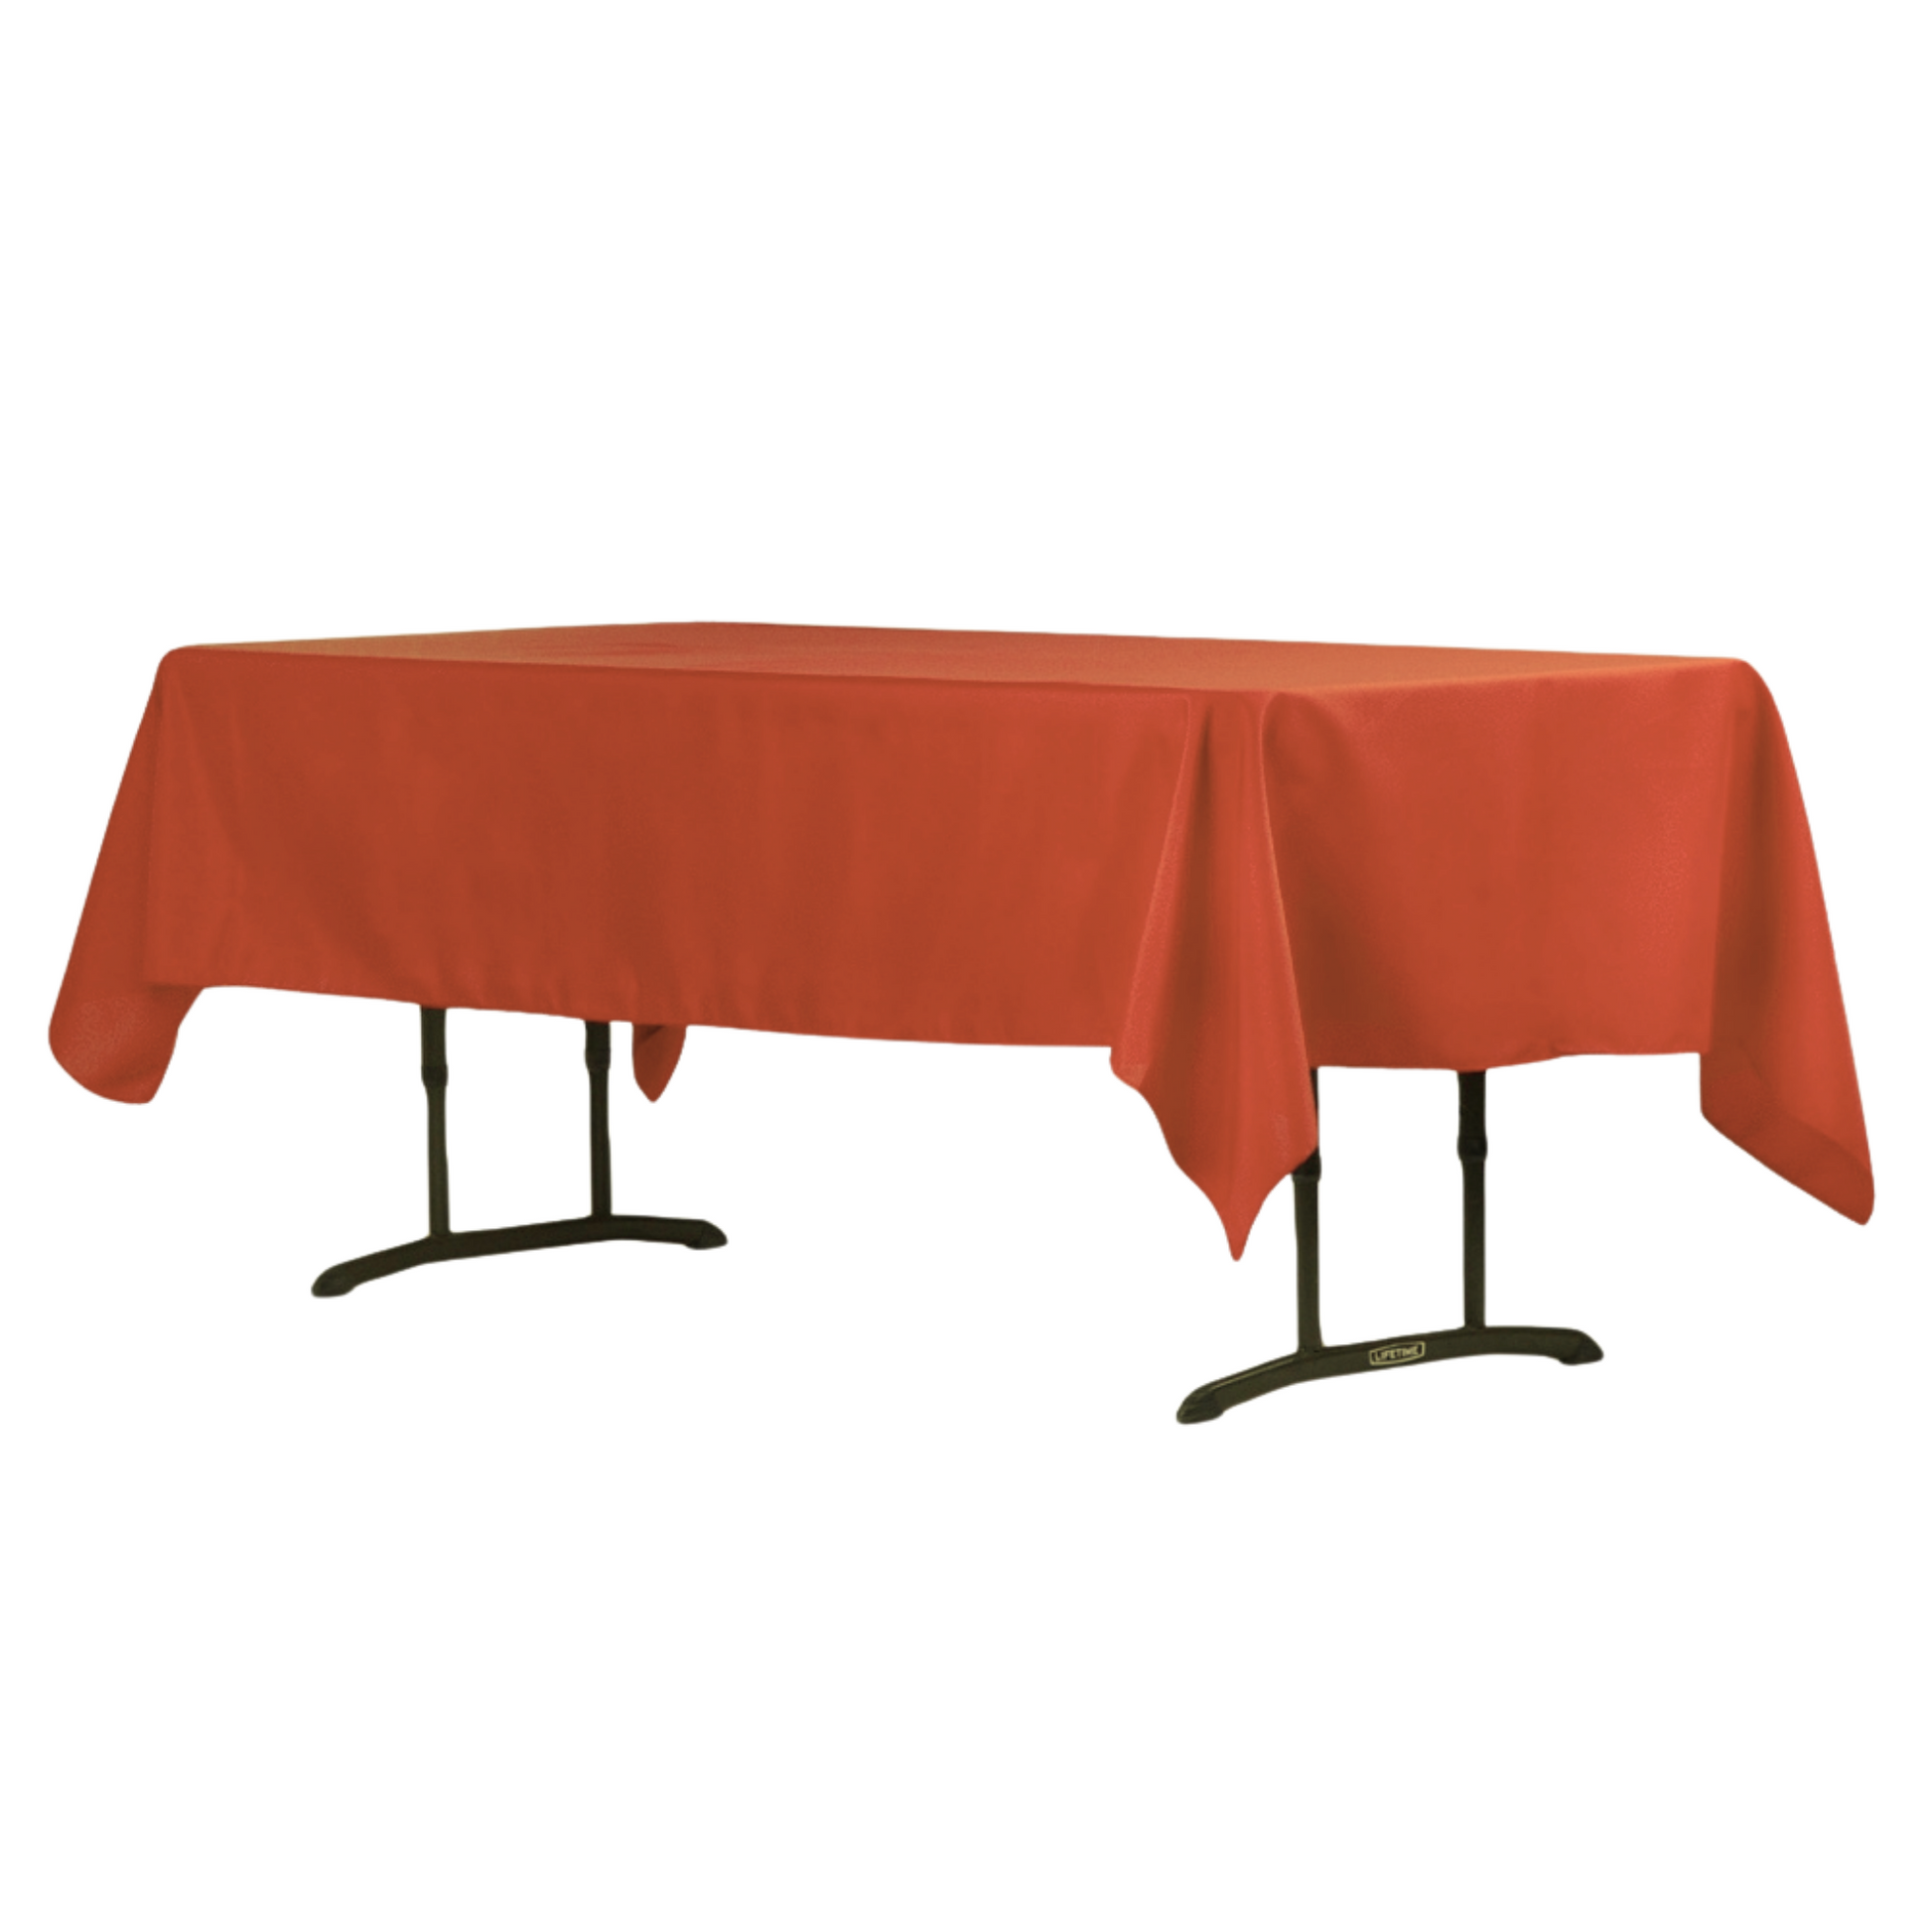 60"x120" Rectangular Polyester Tablecloth - Rust